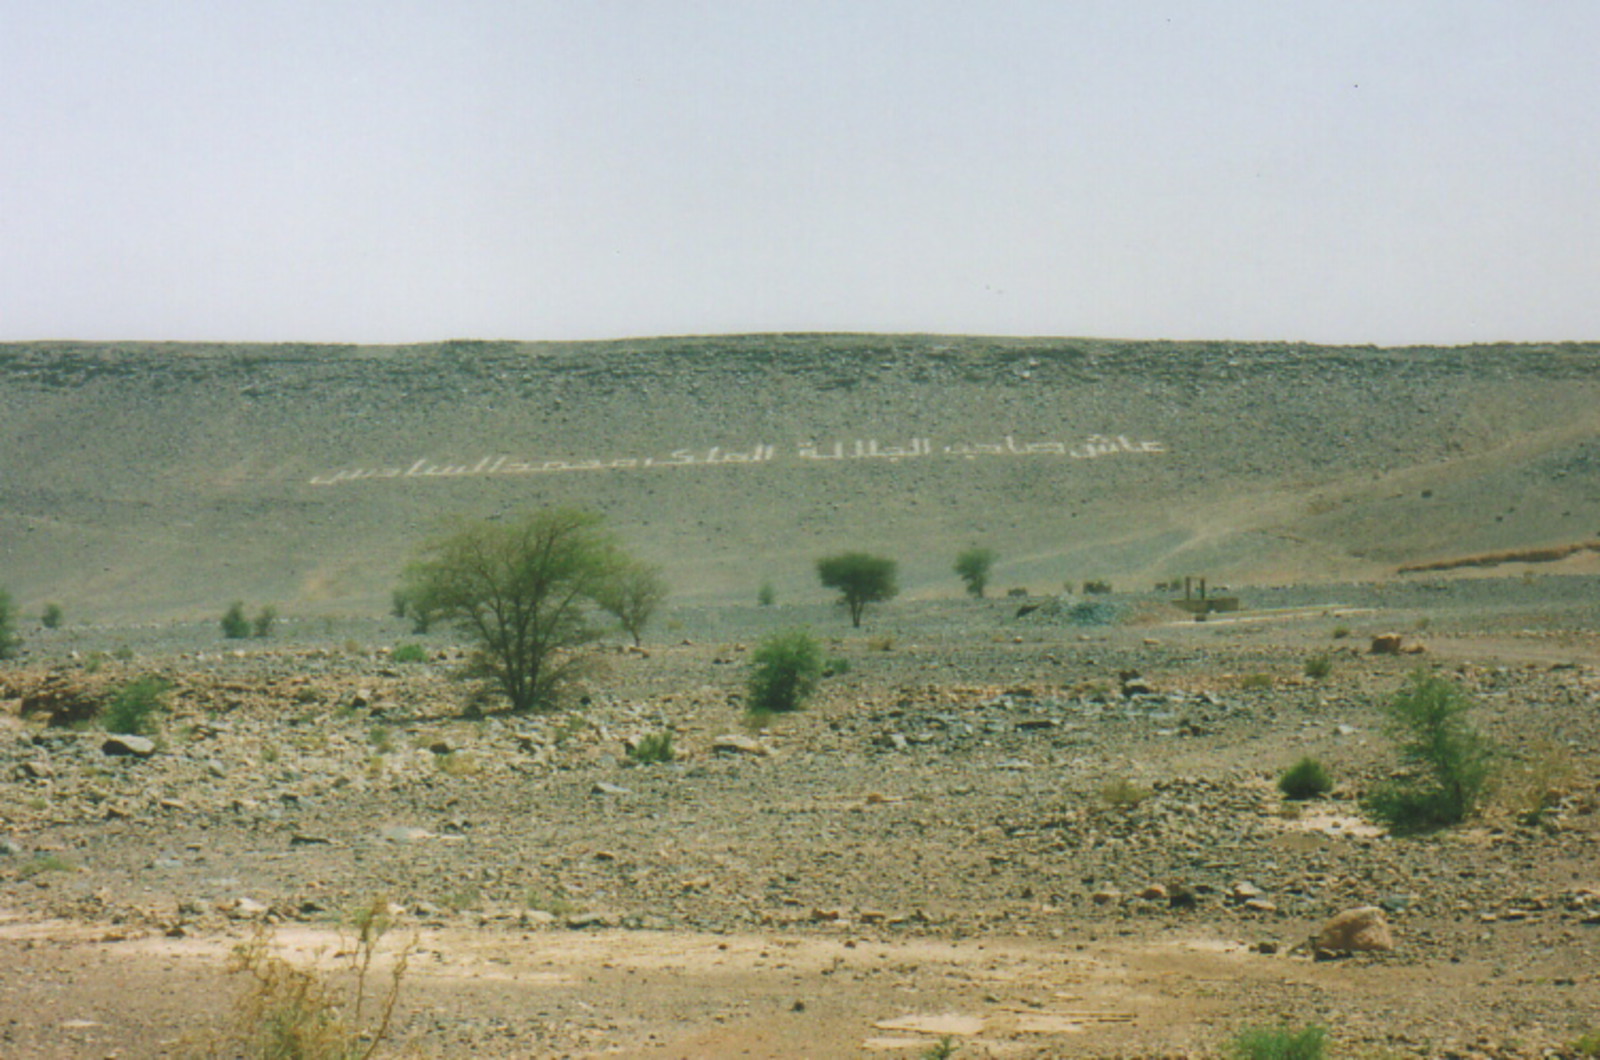 An Arabic message on a hill